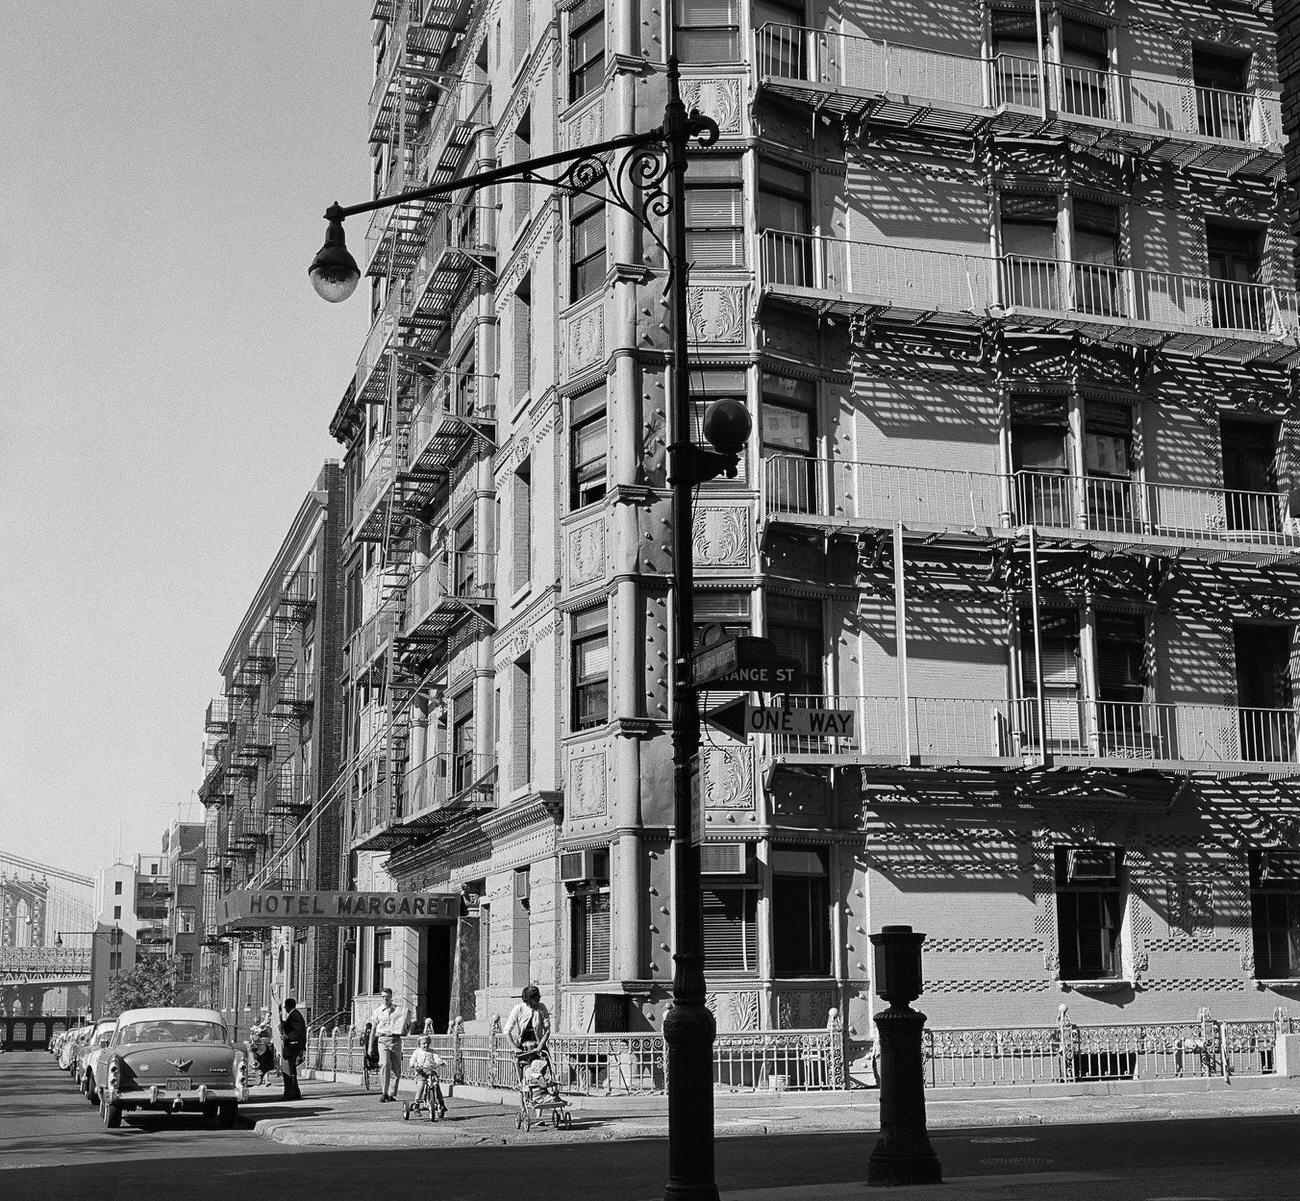 Hotel Margaret On Columbia Heights And Orange Street, Brooklyn Heights, 1958.